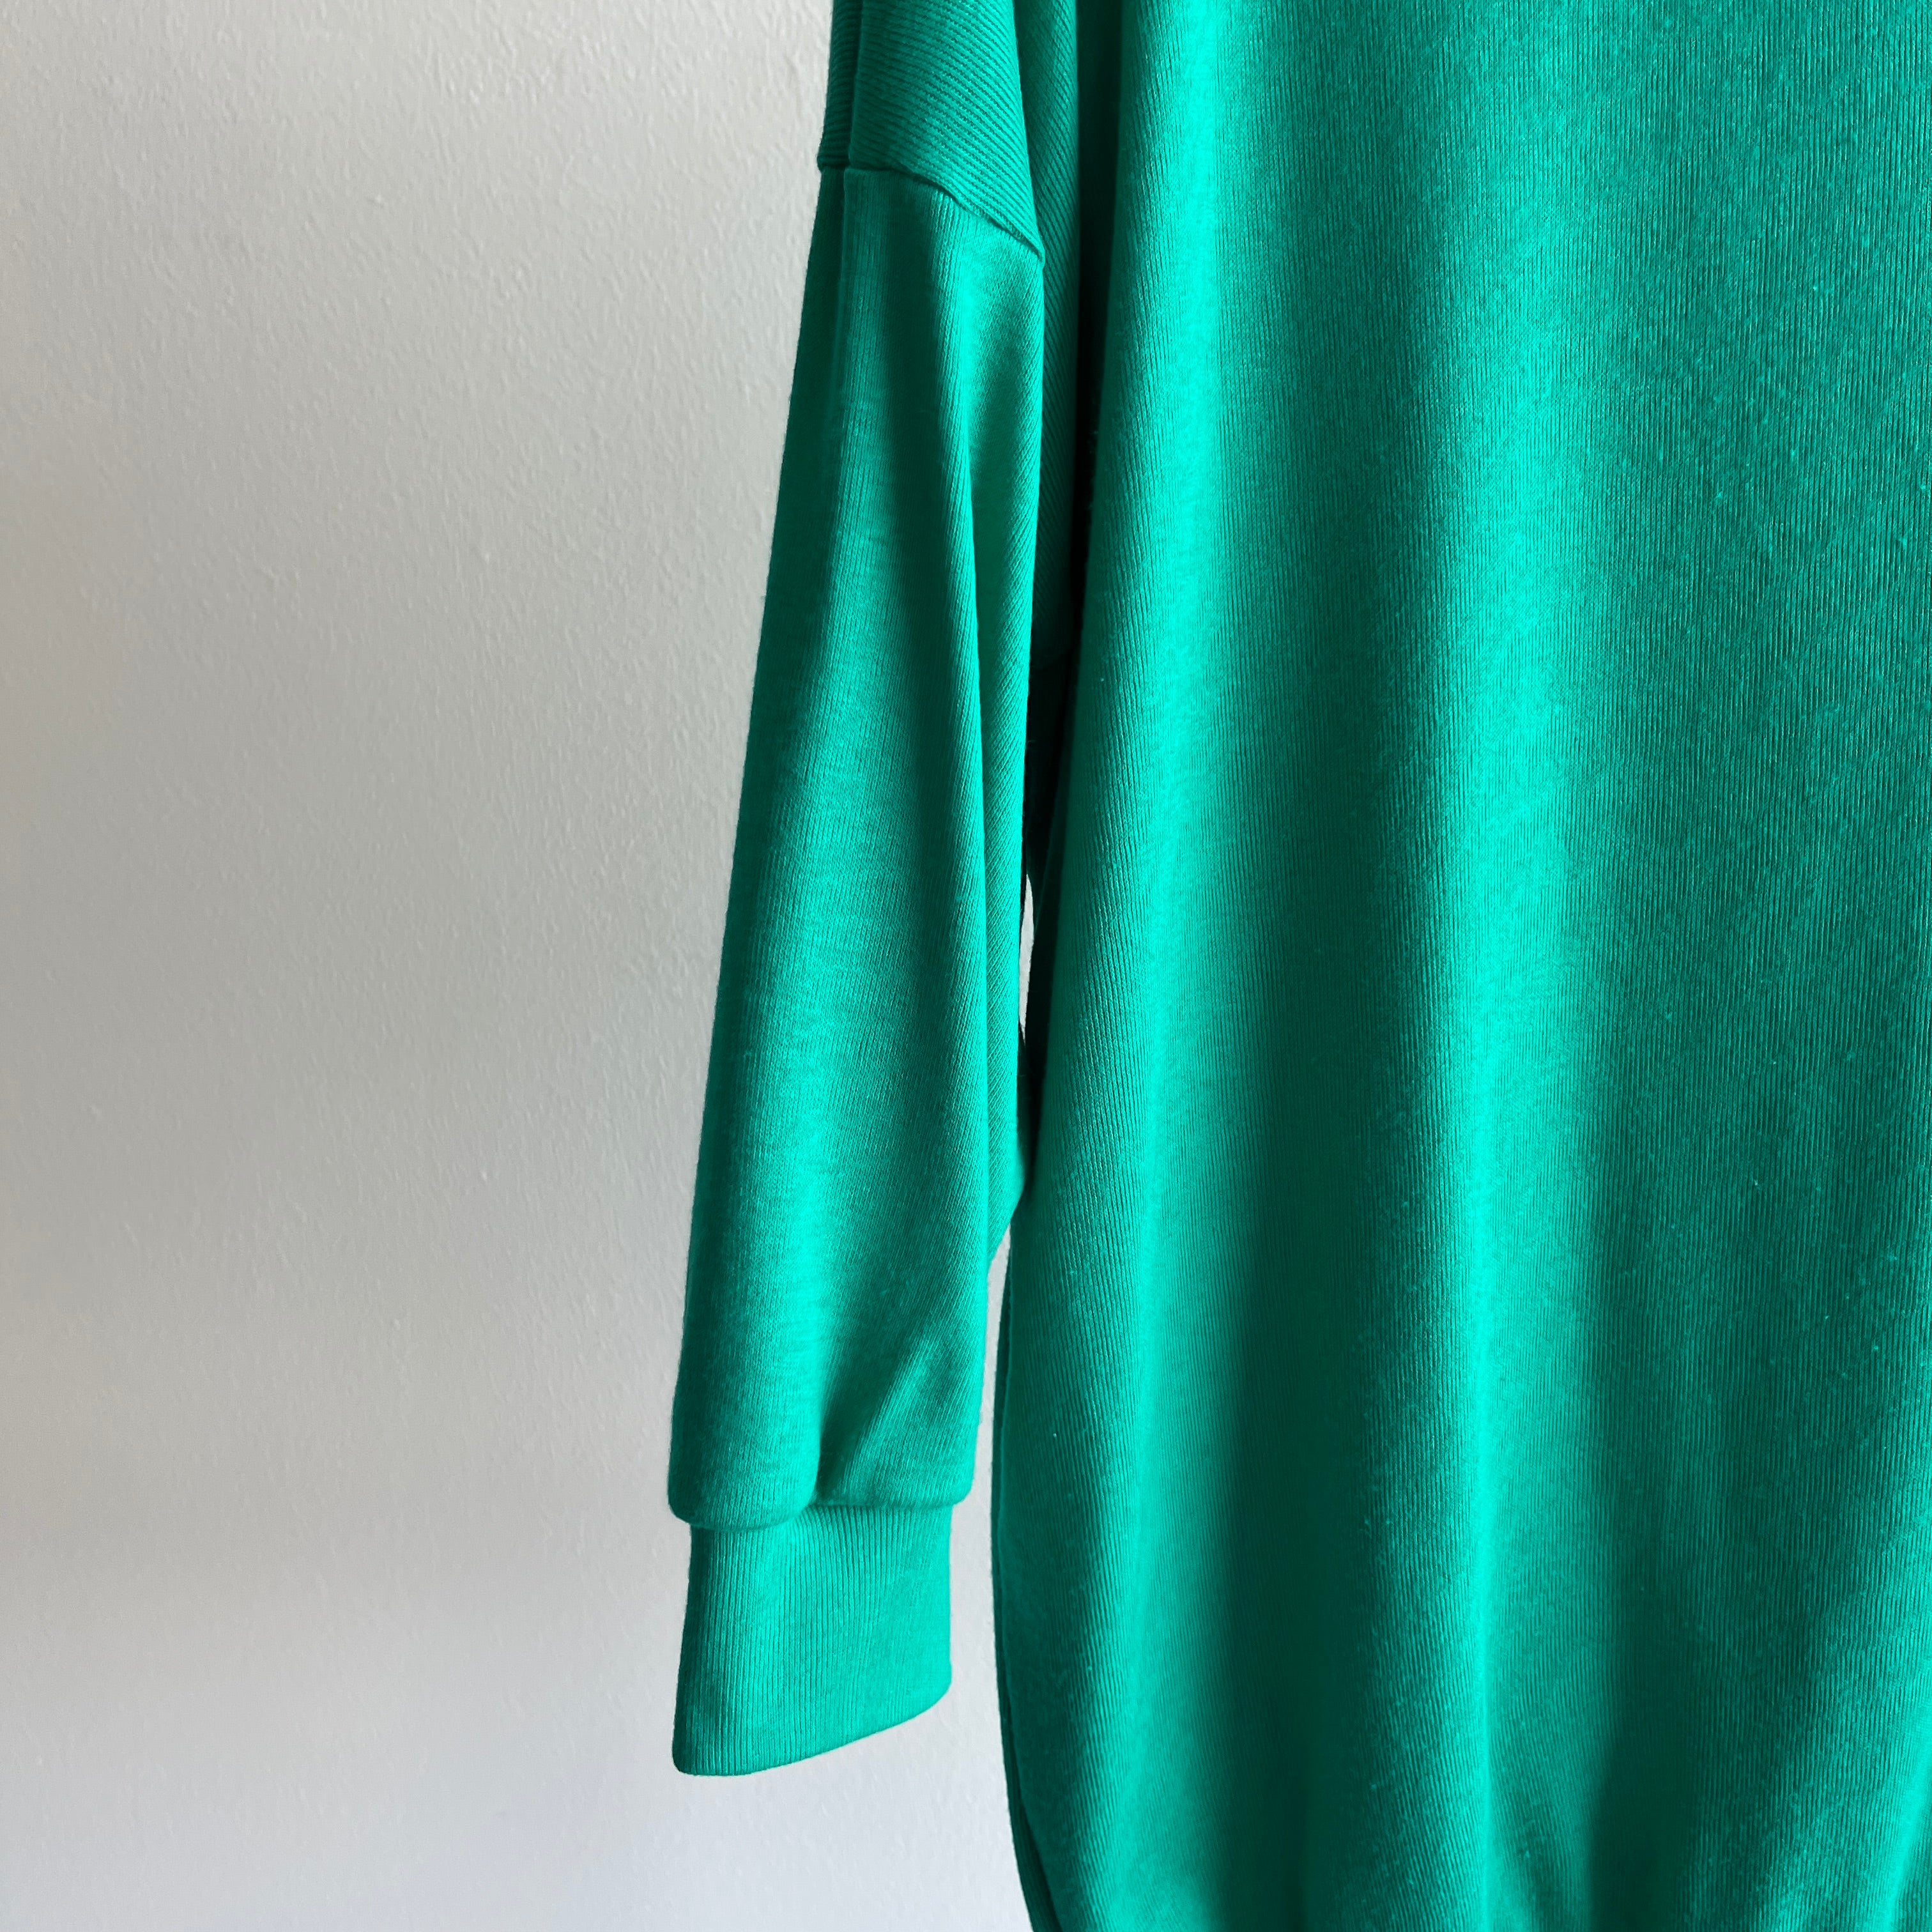 1980s Teal Dolman-esque Super Duper Slouchy Sweatshirt/Shirt